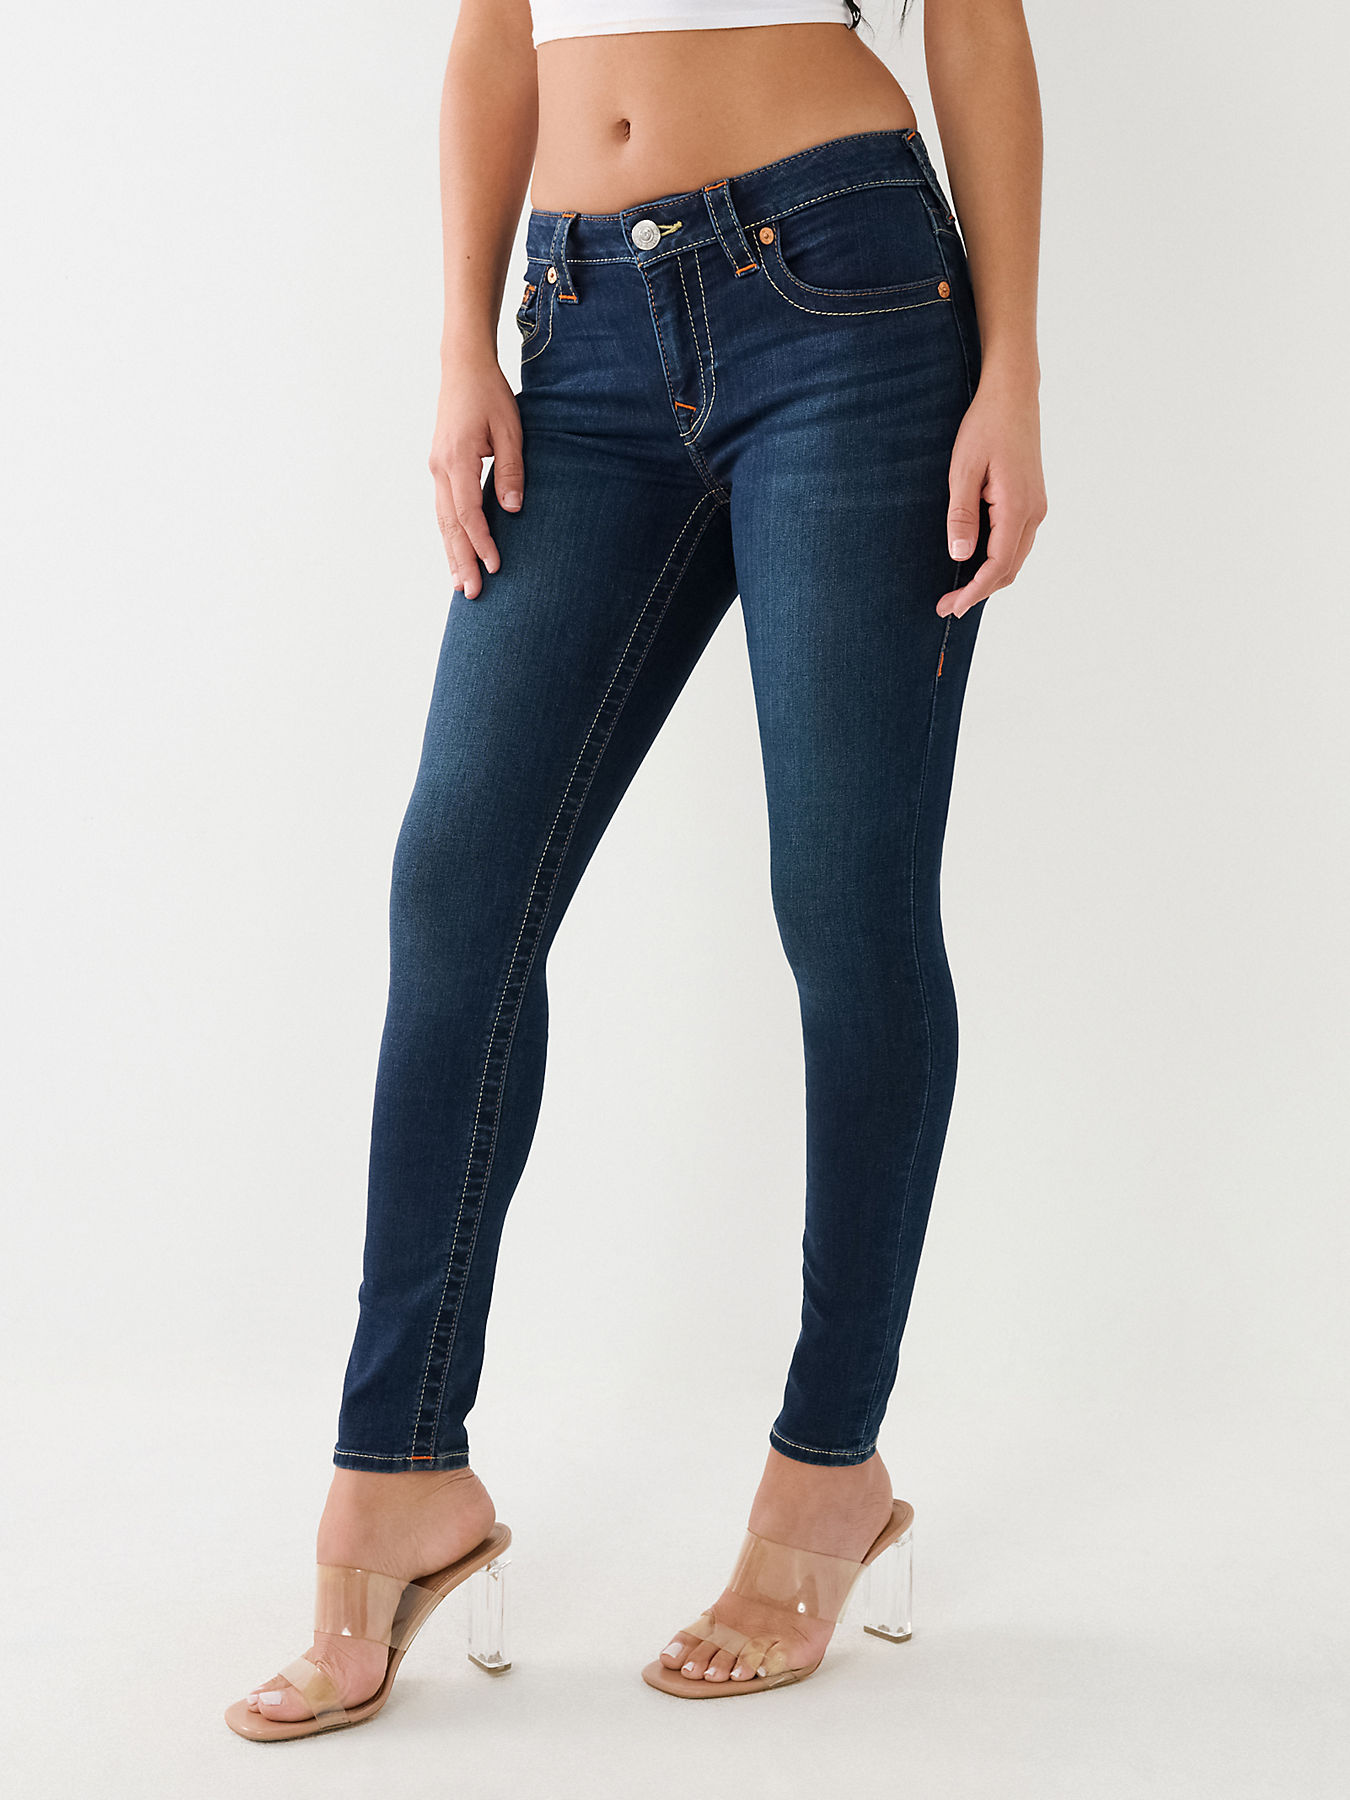 Jennie Curvy Skinny Jean | Women's Jeans | True Religion